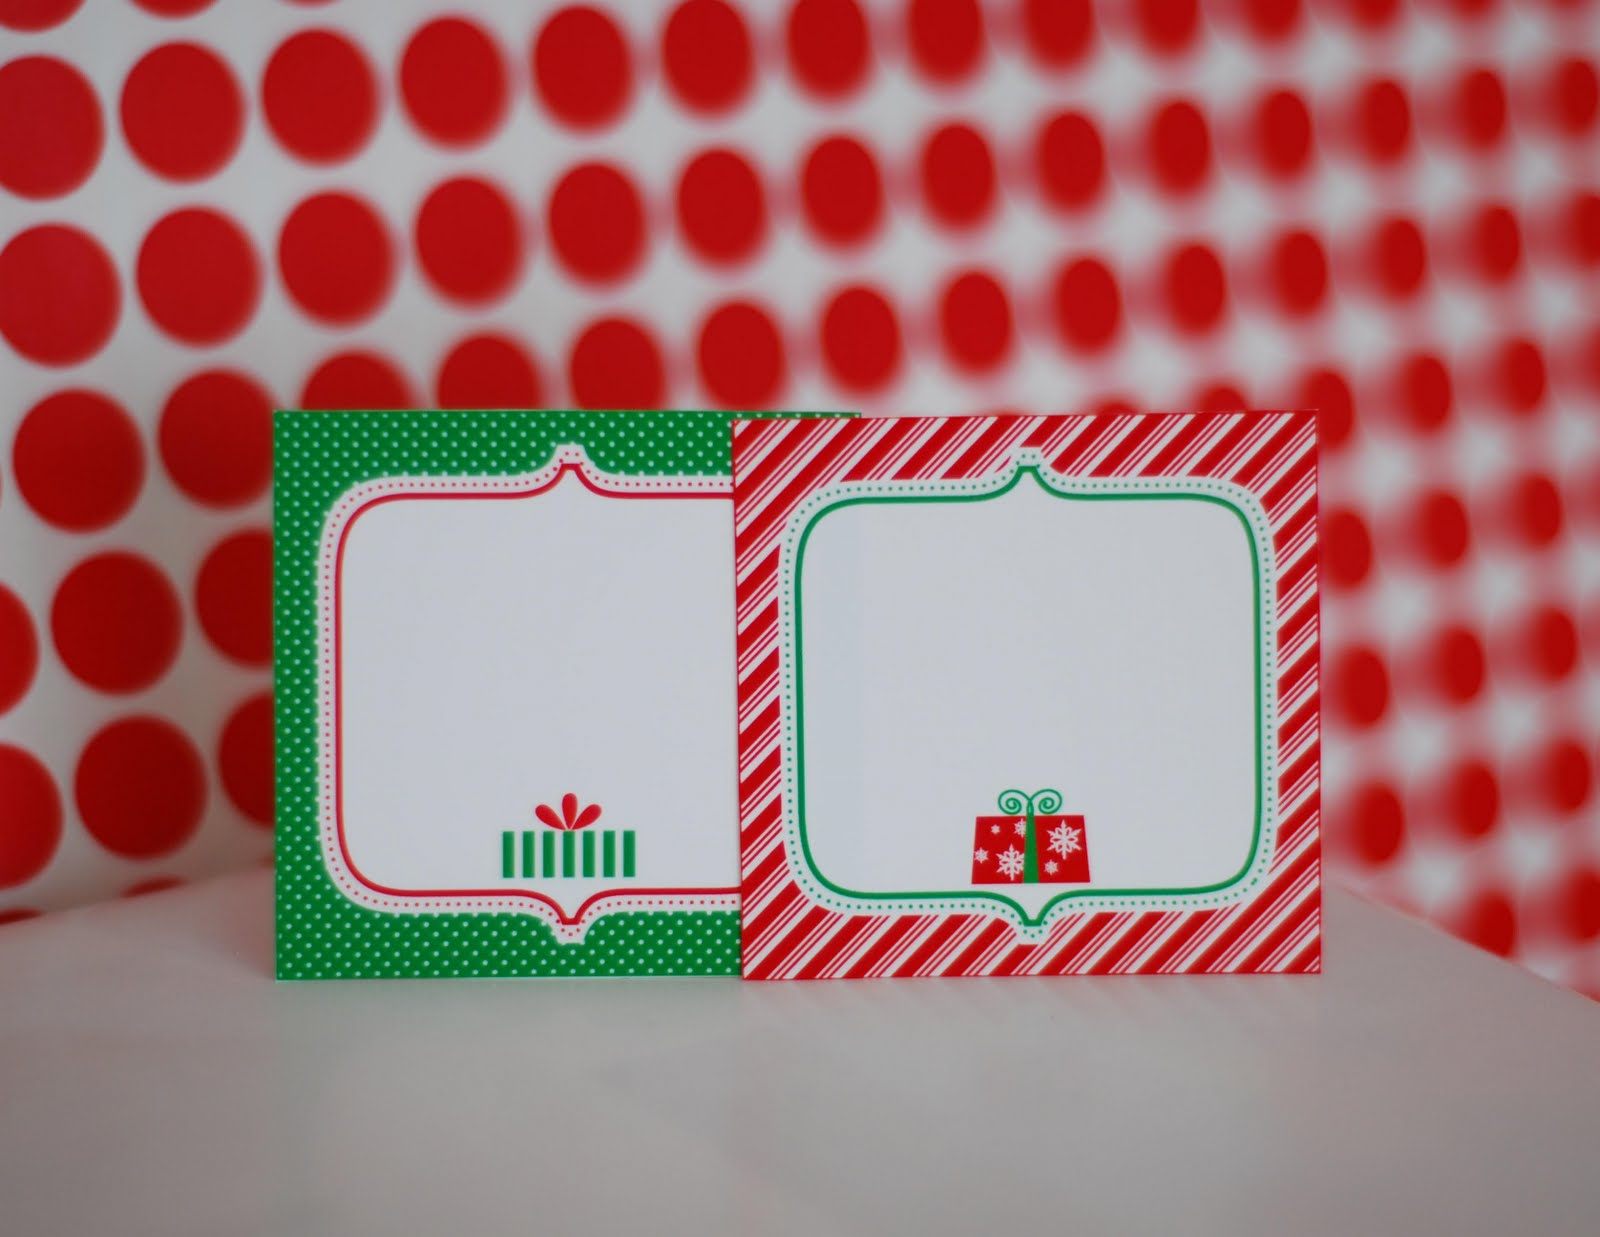 Free Printable: Letter To Santa, Wish List And Gift Tags! - Anders - Free Printable Christmas Food Labels